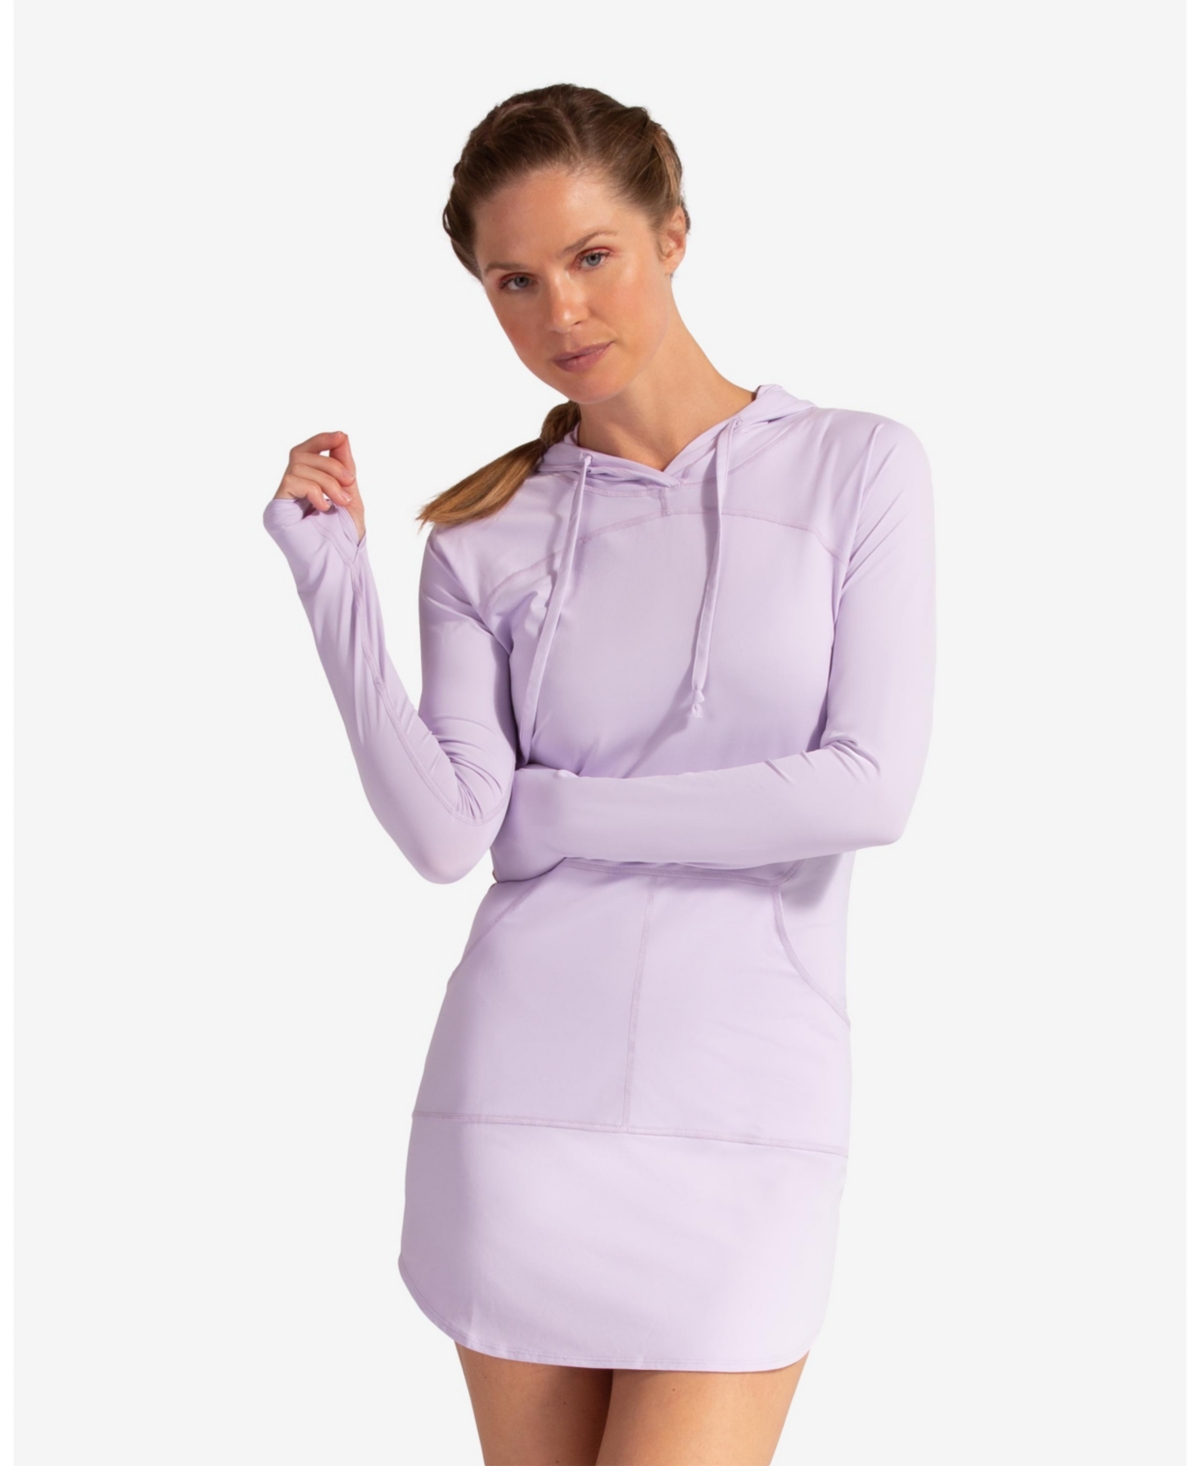 Women's Upf 50+ Sun Protection Hoodie Dress - Soft grey